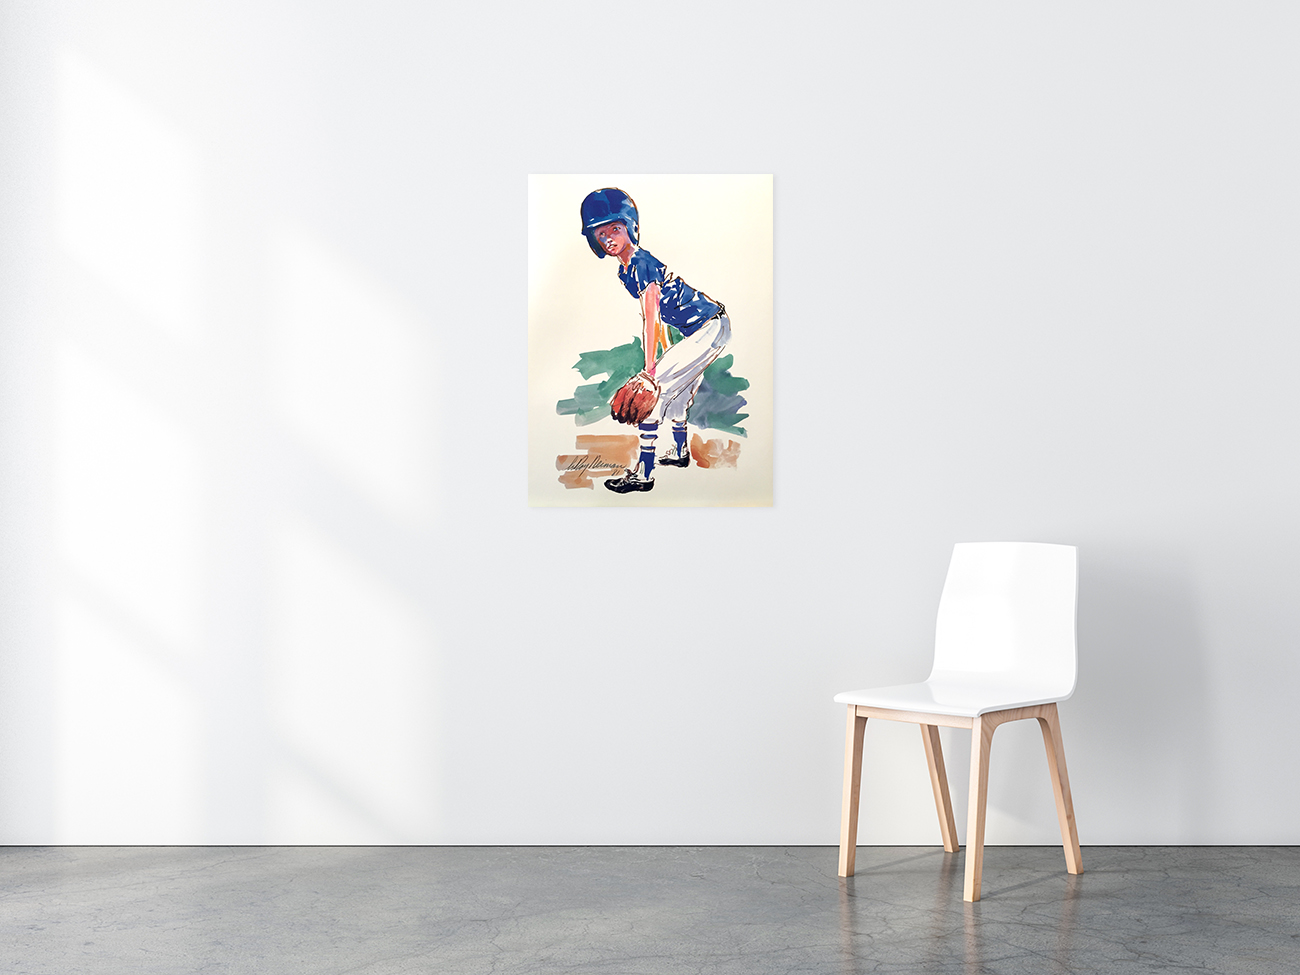 The Little Fielder Baseball poster in situ